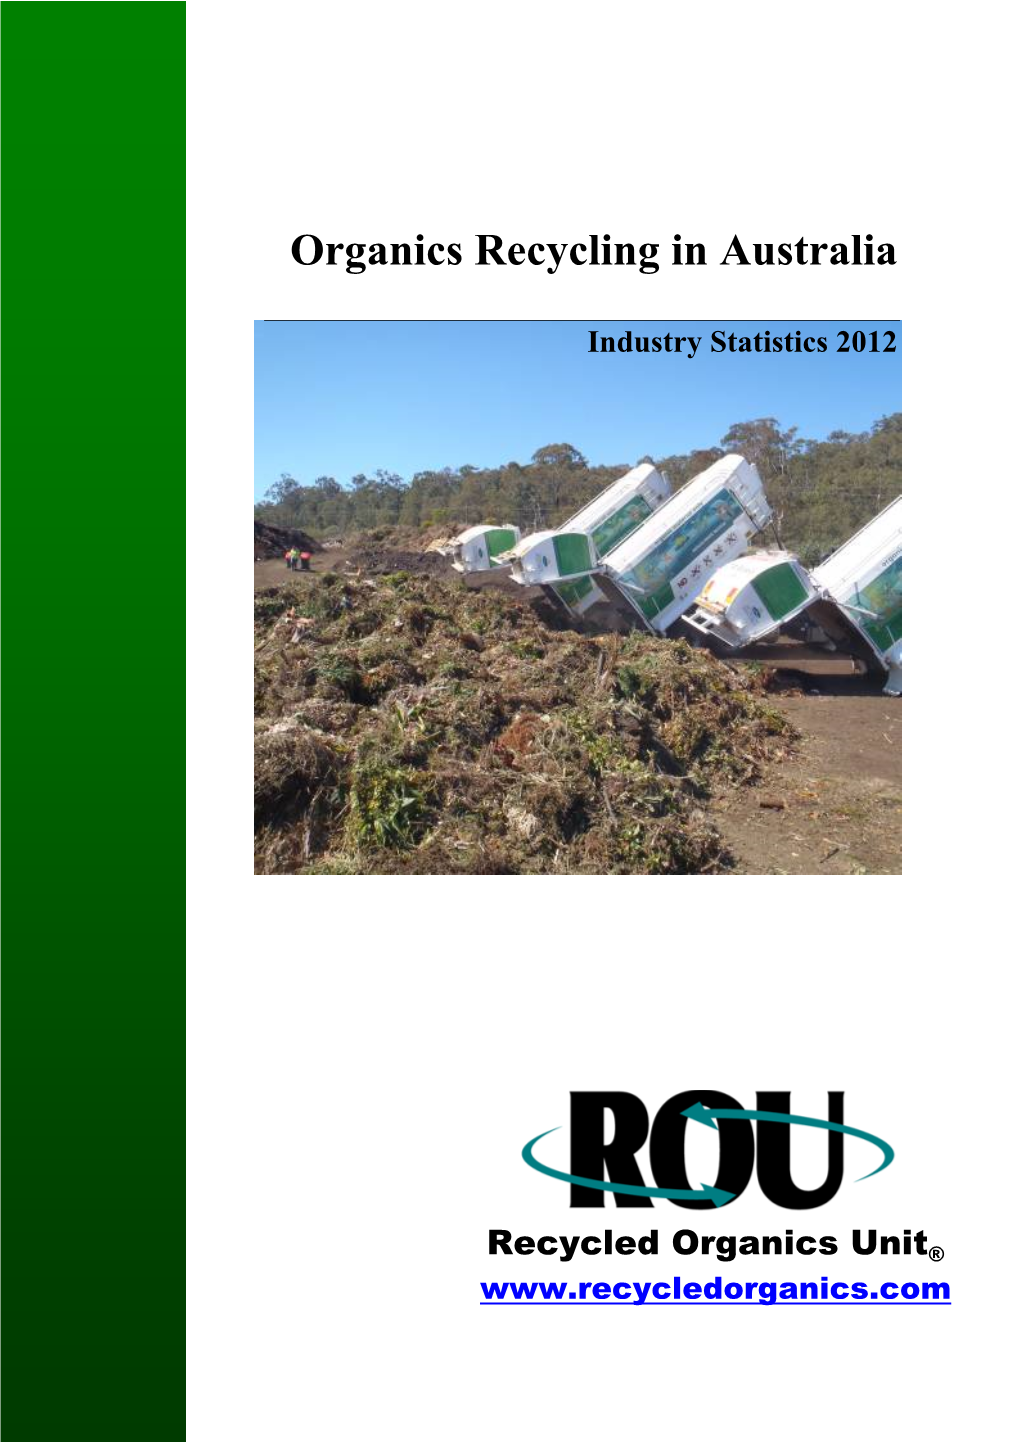 Organics Recycling in Australia – Industry Statistics 2012